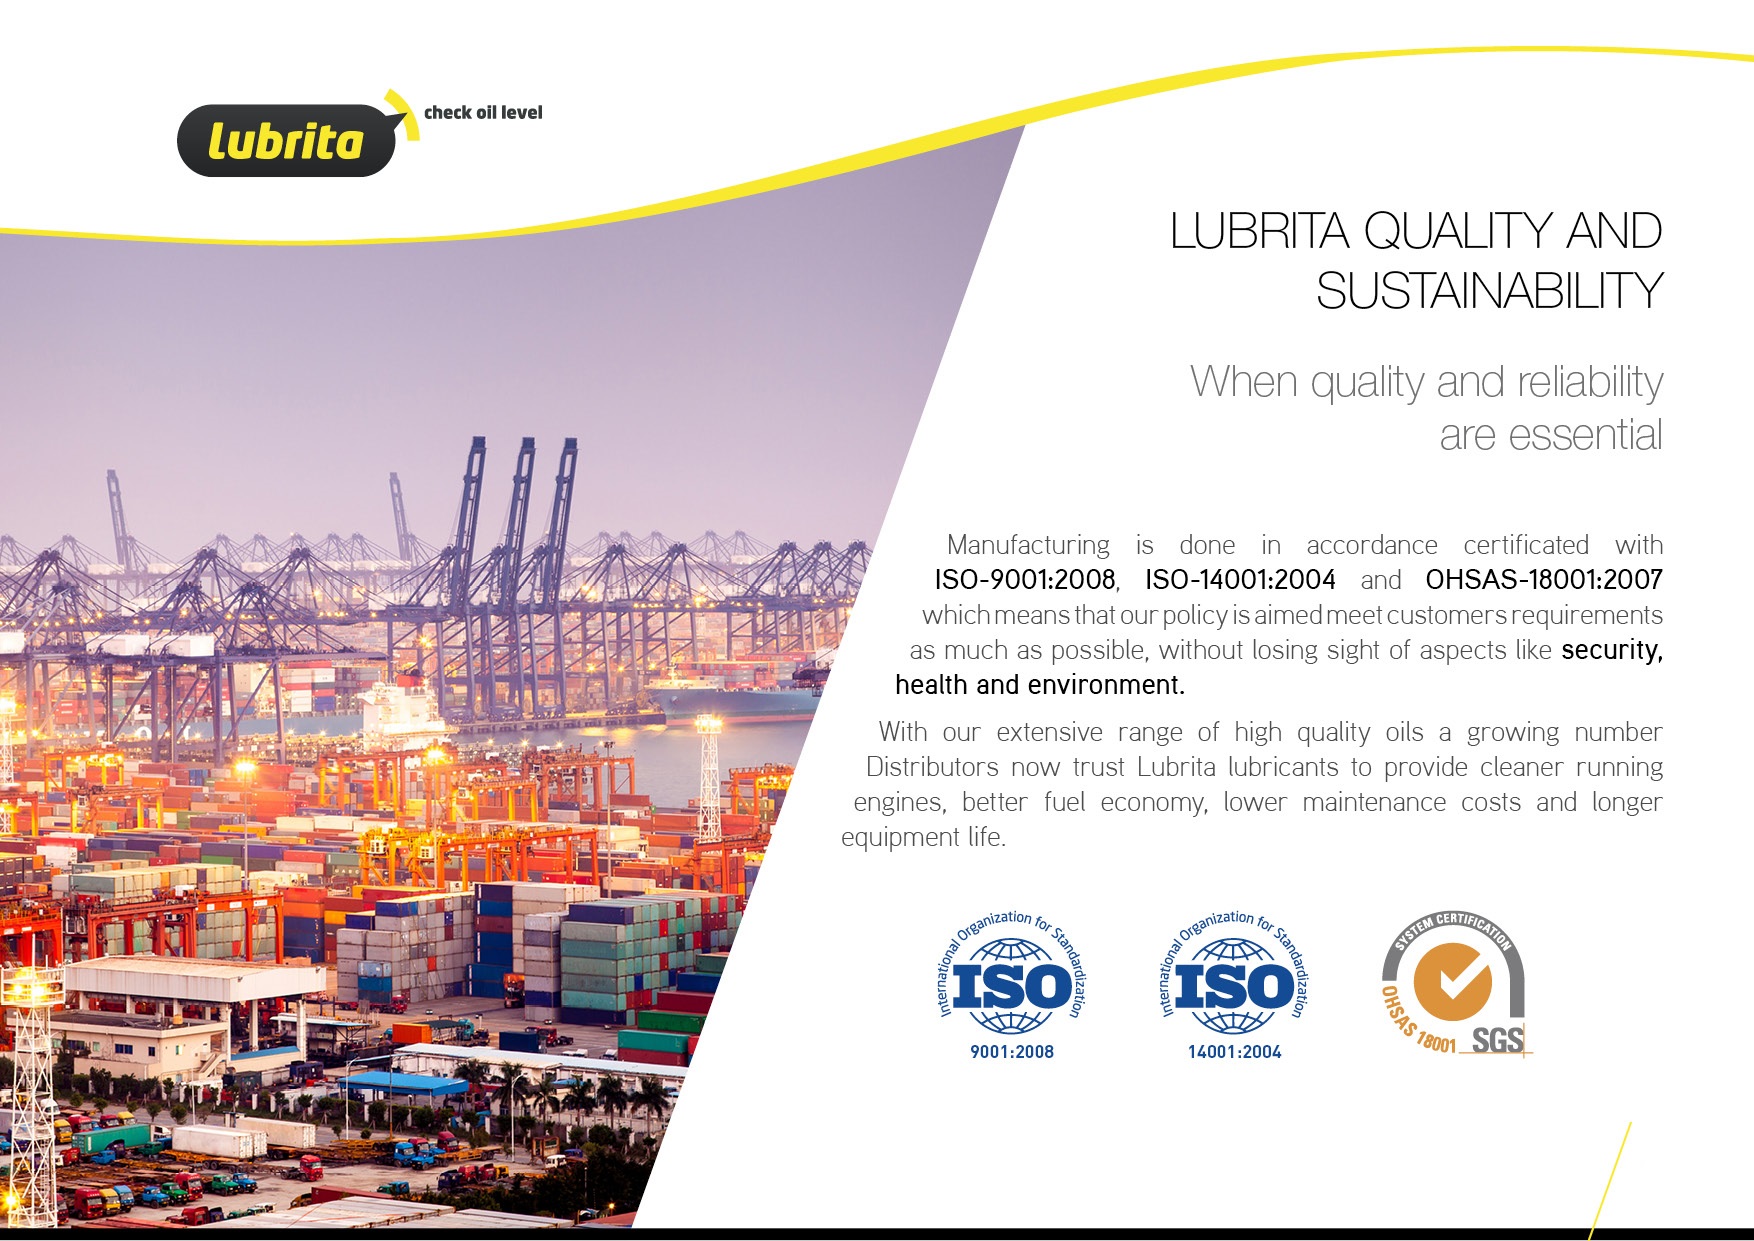 Lubrita-Presentation-Qality and Sustainability16_v4-04.jpg